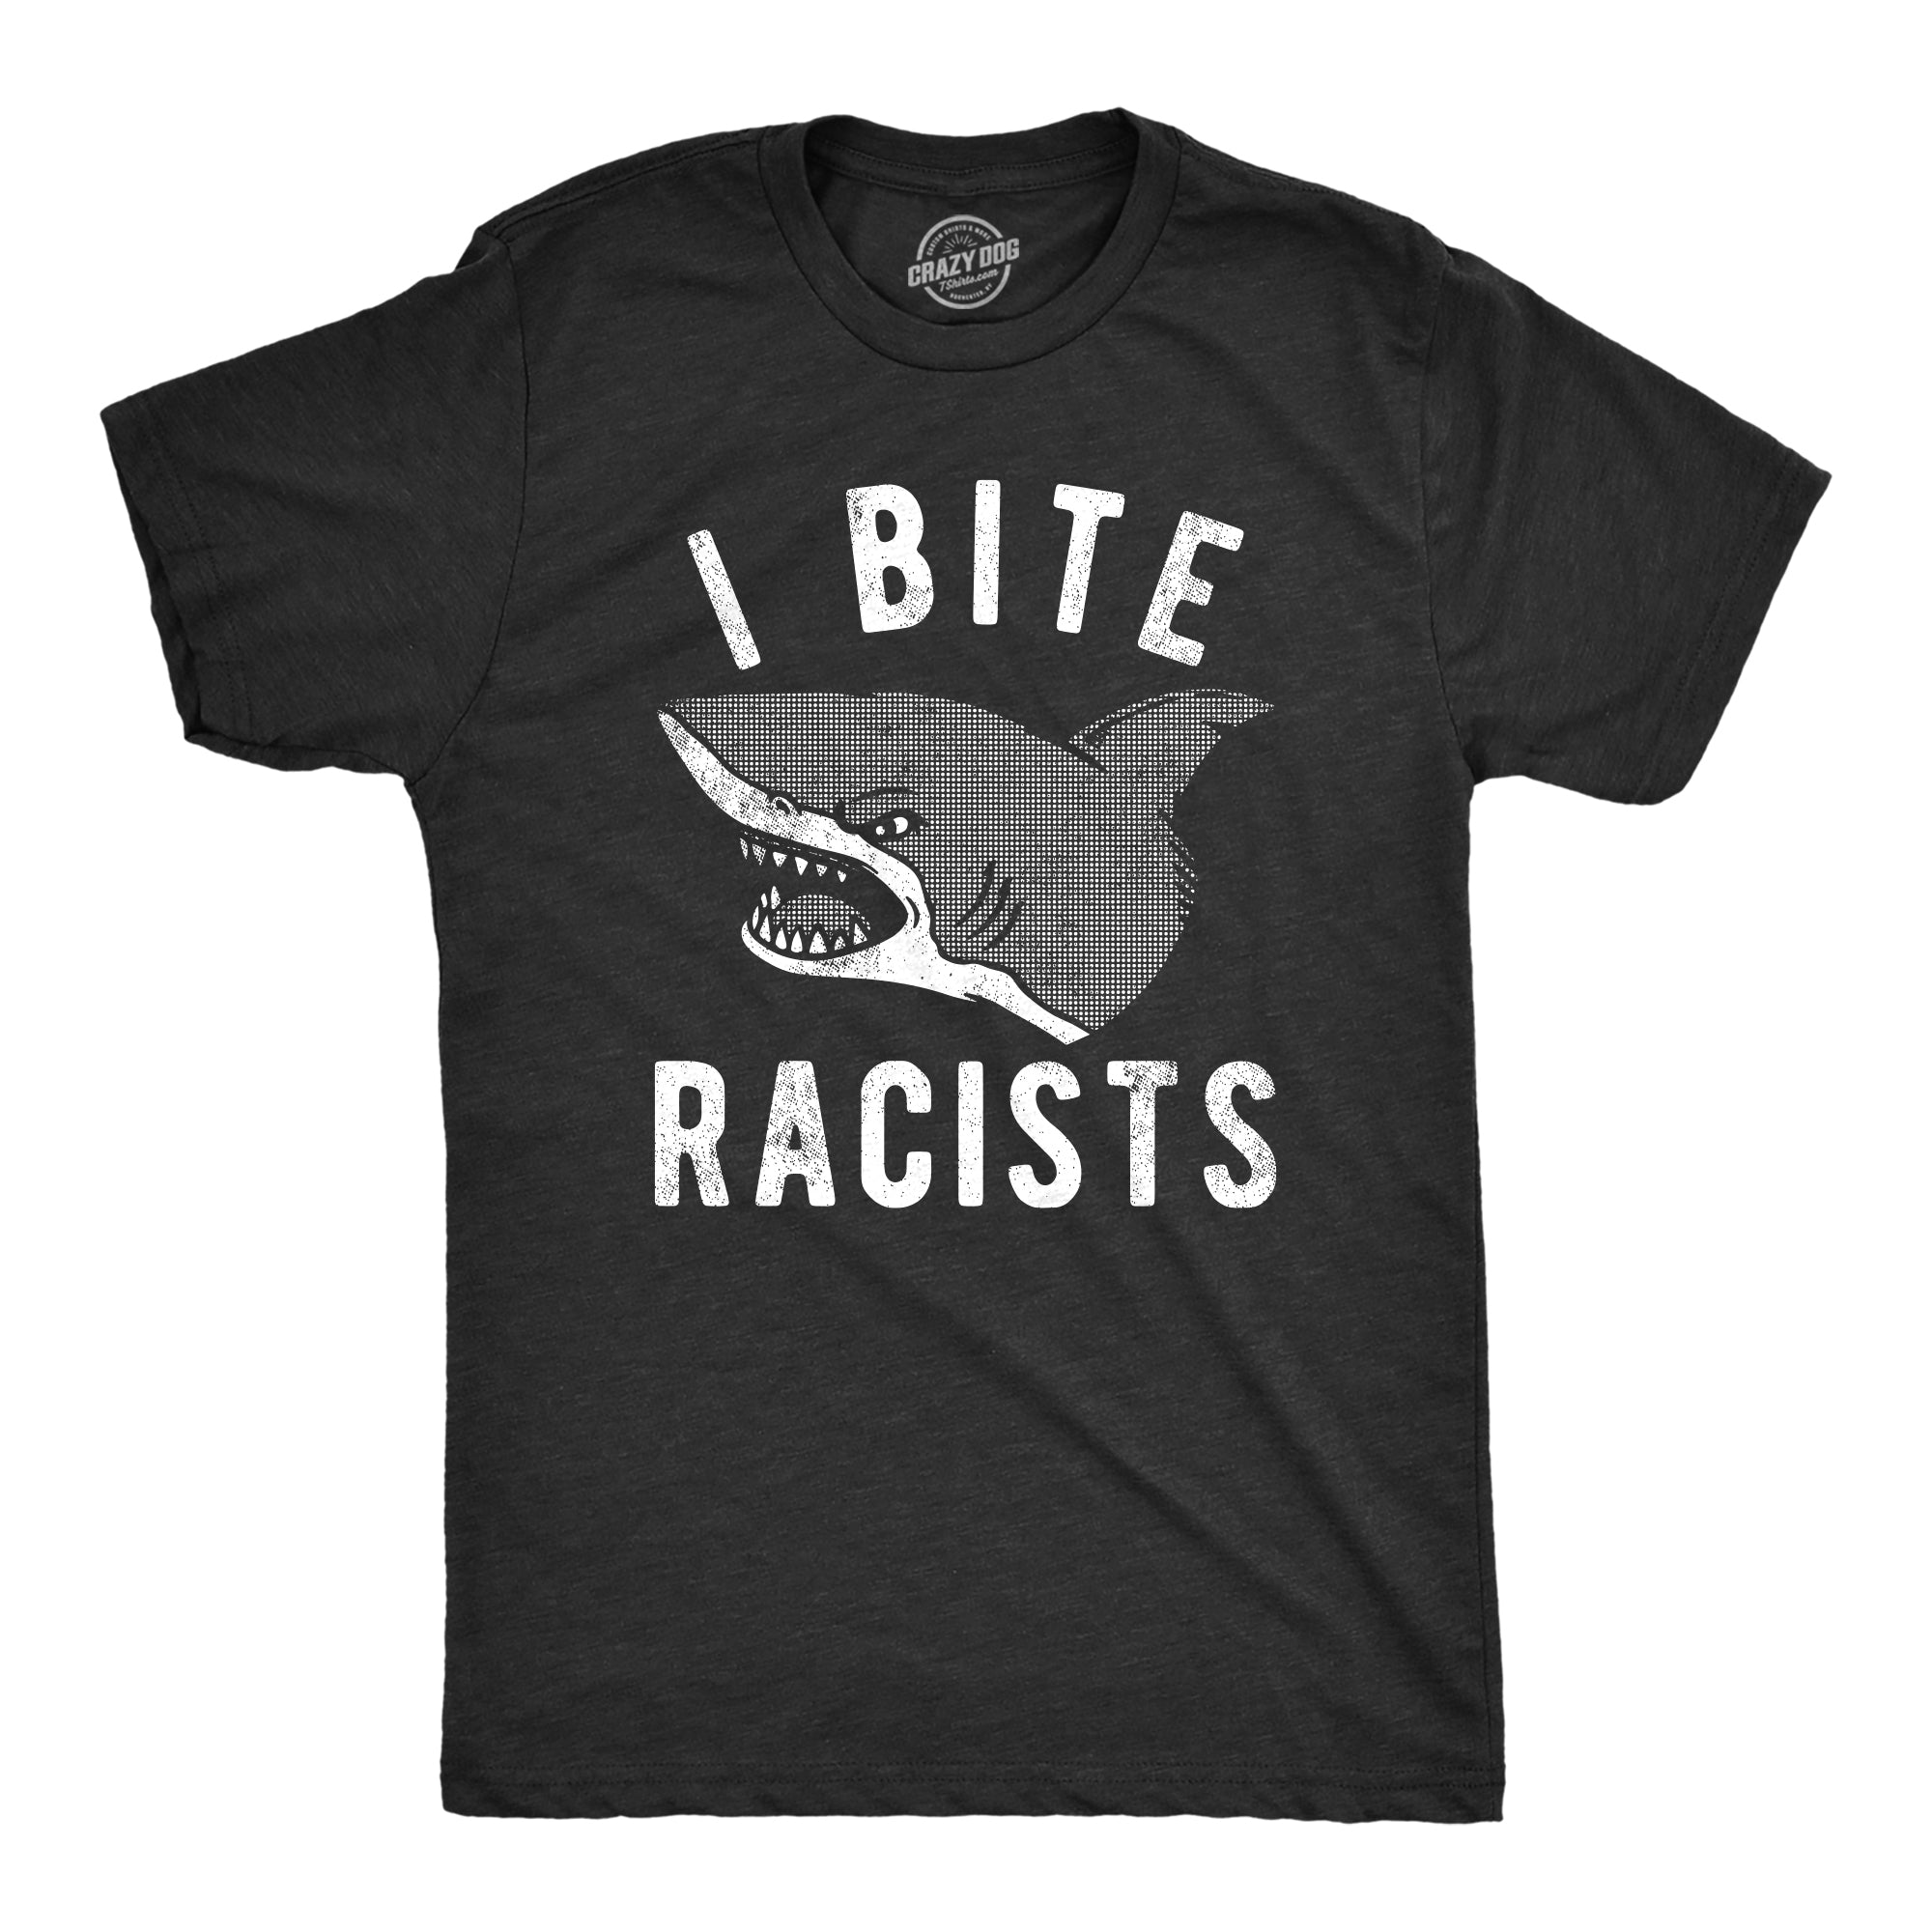 Funny Heather Black - BITE I Bite Racists Mens T Shirt Nerdy shark week Sarcastic Tee